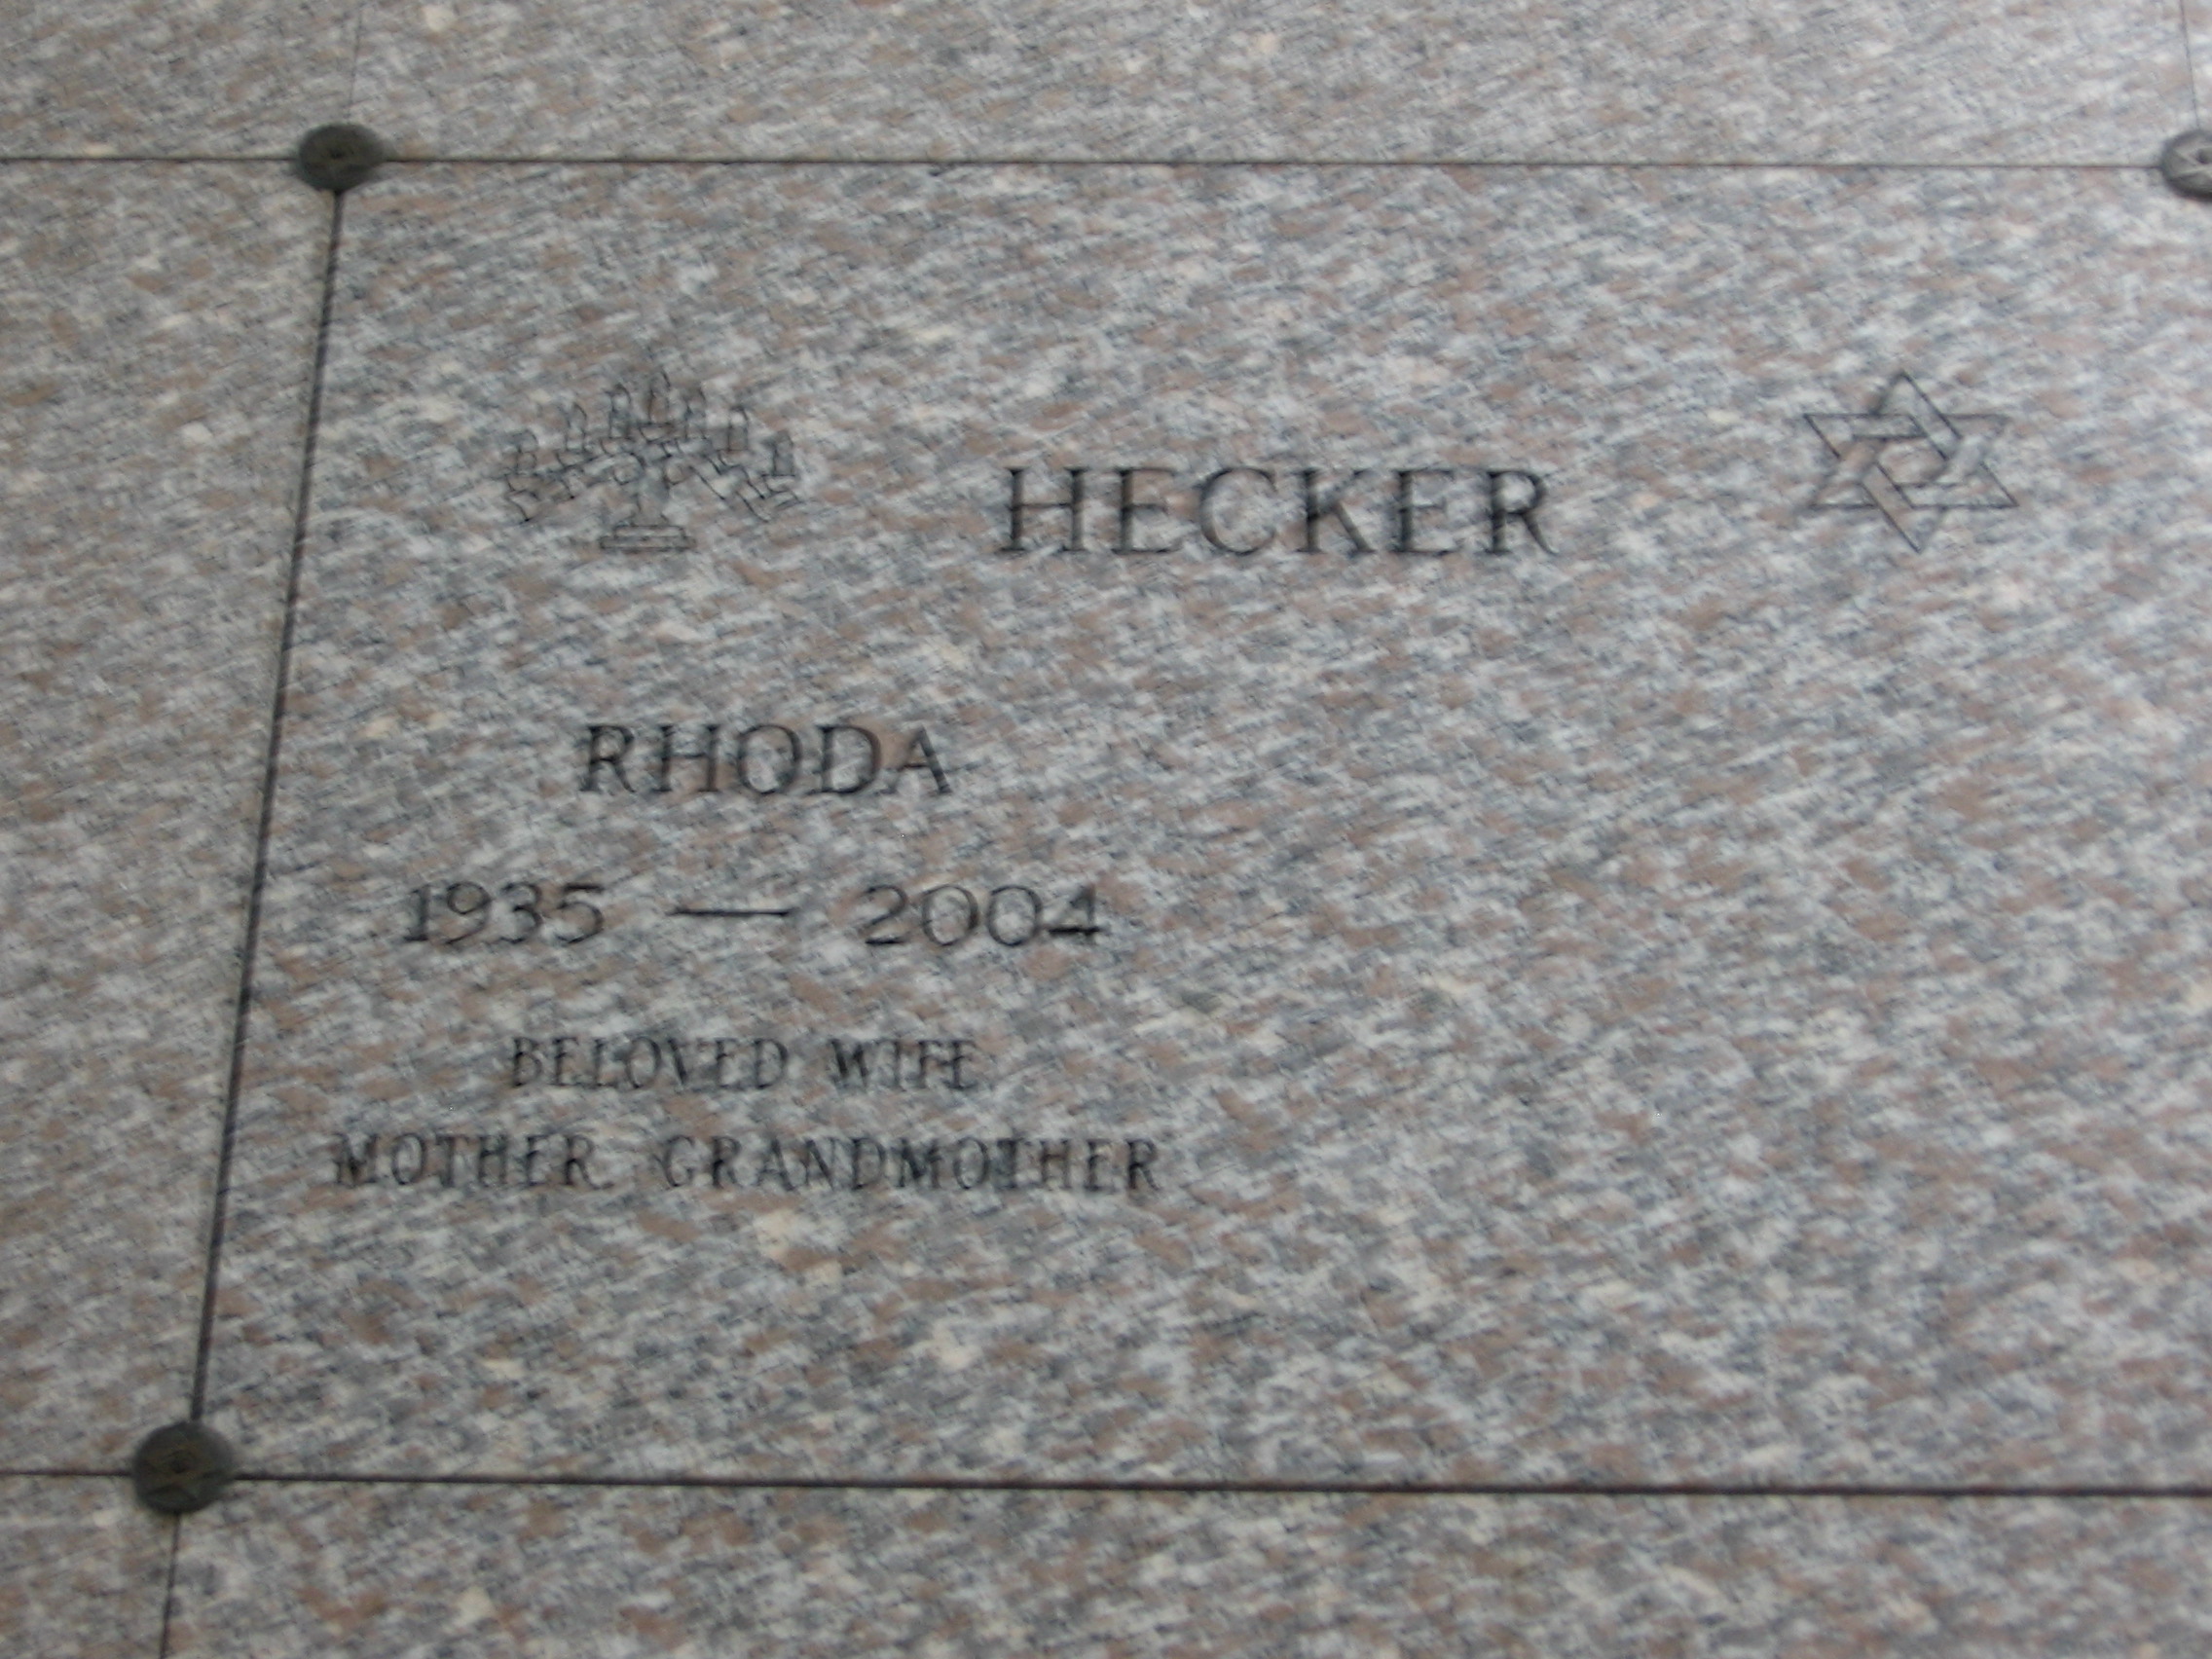 Rhoda Hecker